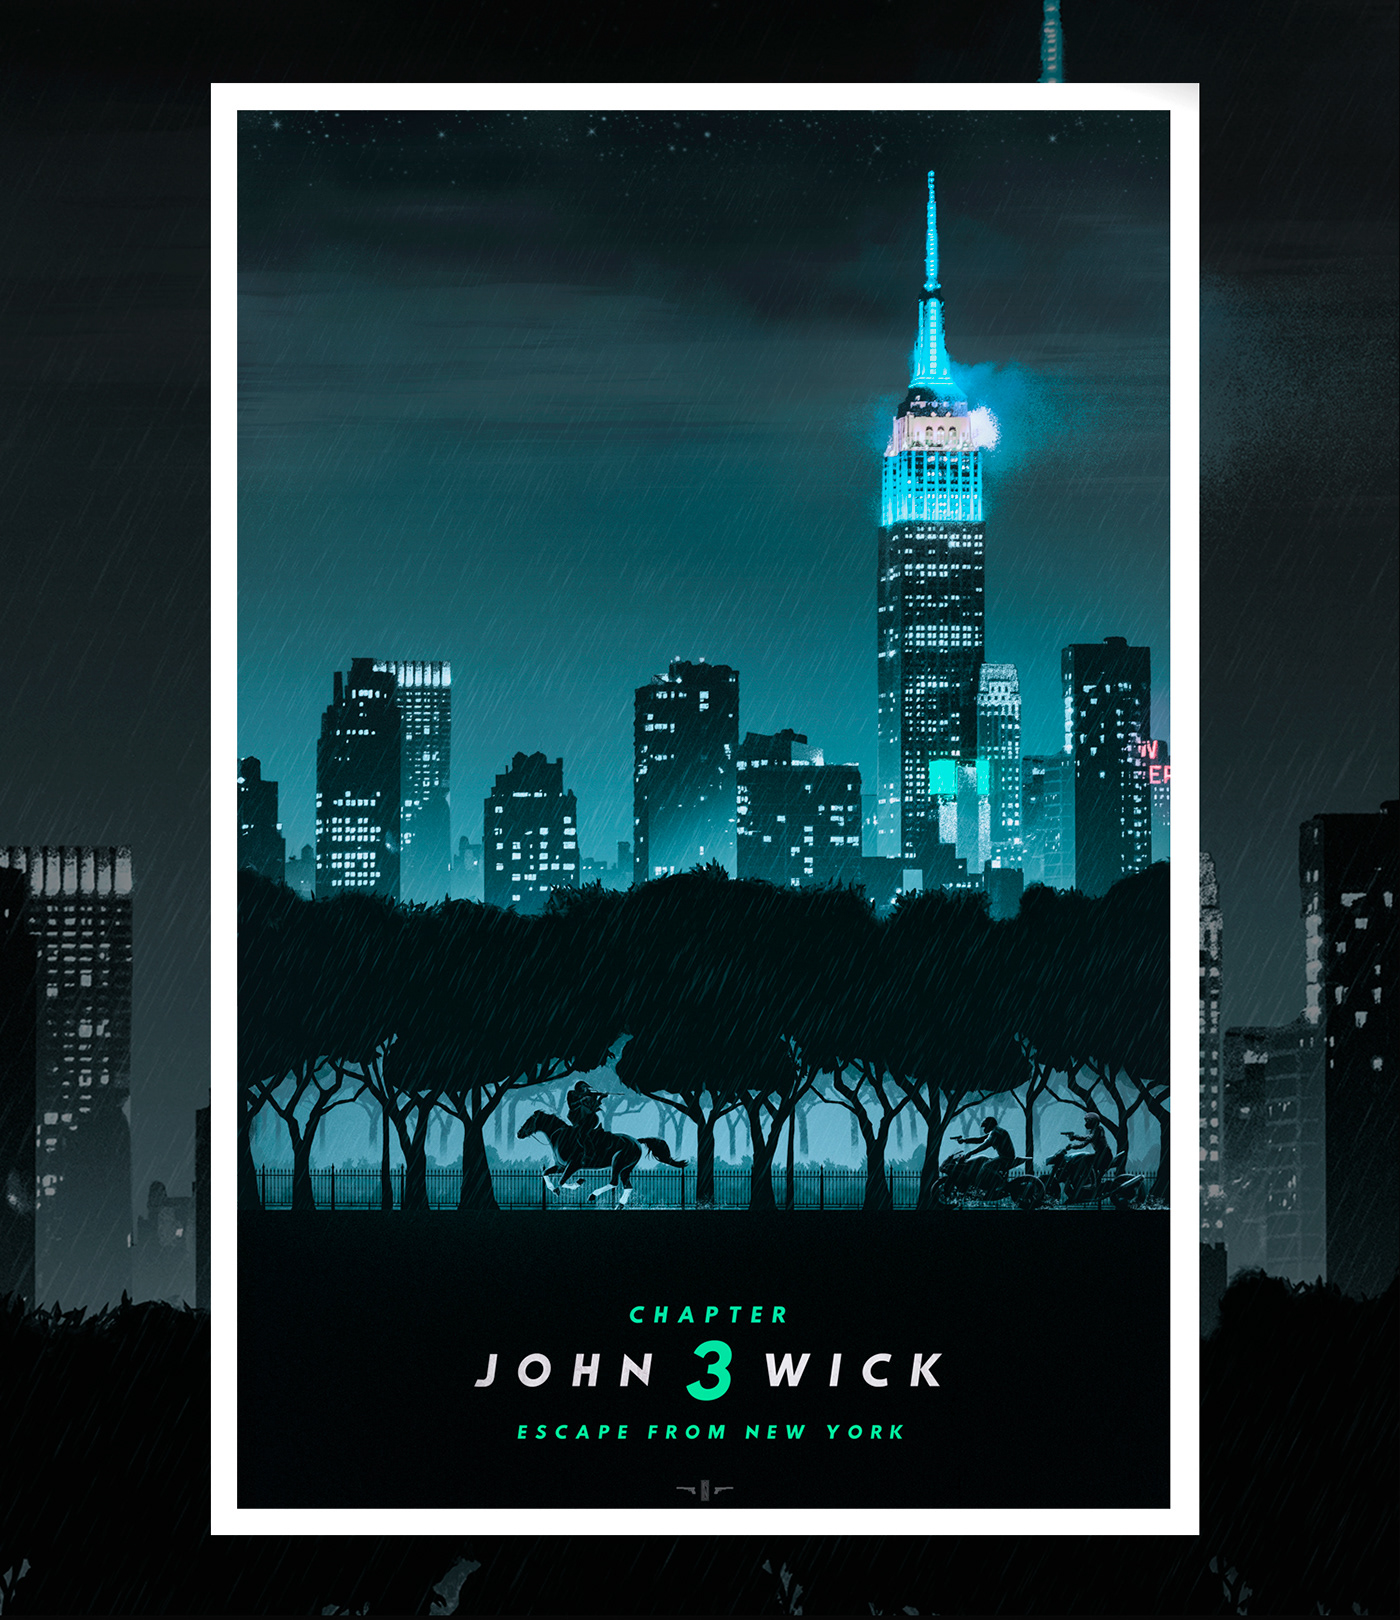 john wick poster Lionsgate neon John wick 3 Parabellum ILLUSTRATION  Digital Art  Fan Art movie poster